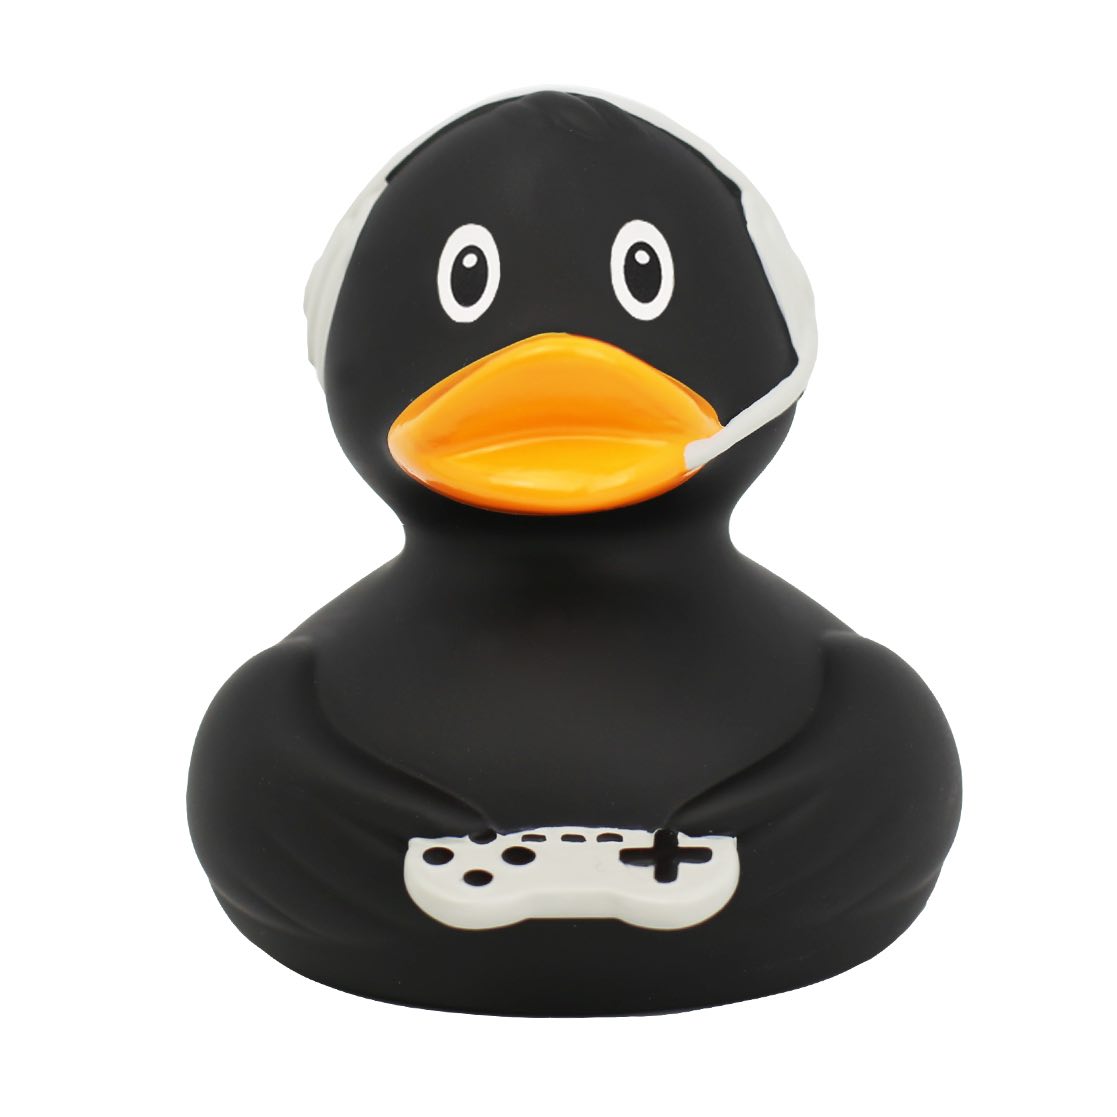 Gamer Black-Rubber Duck Buy premium rubber ducks online